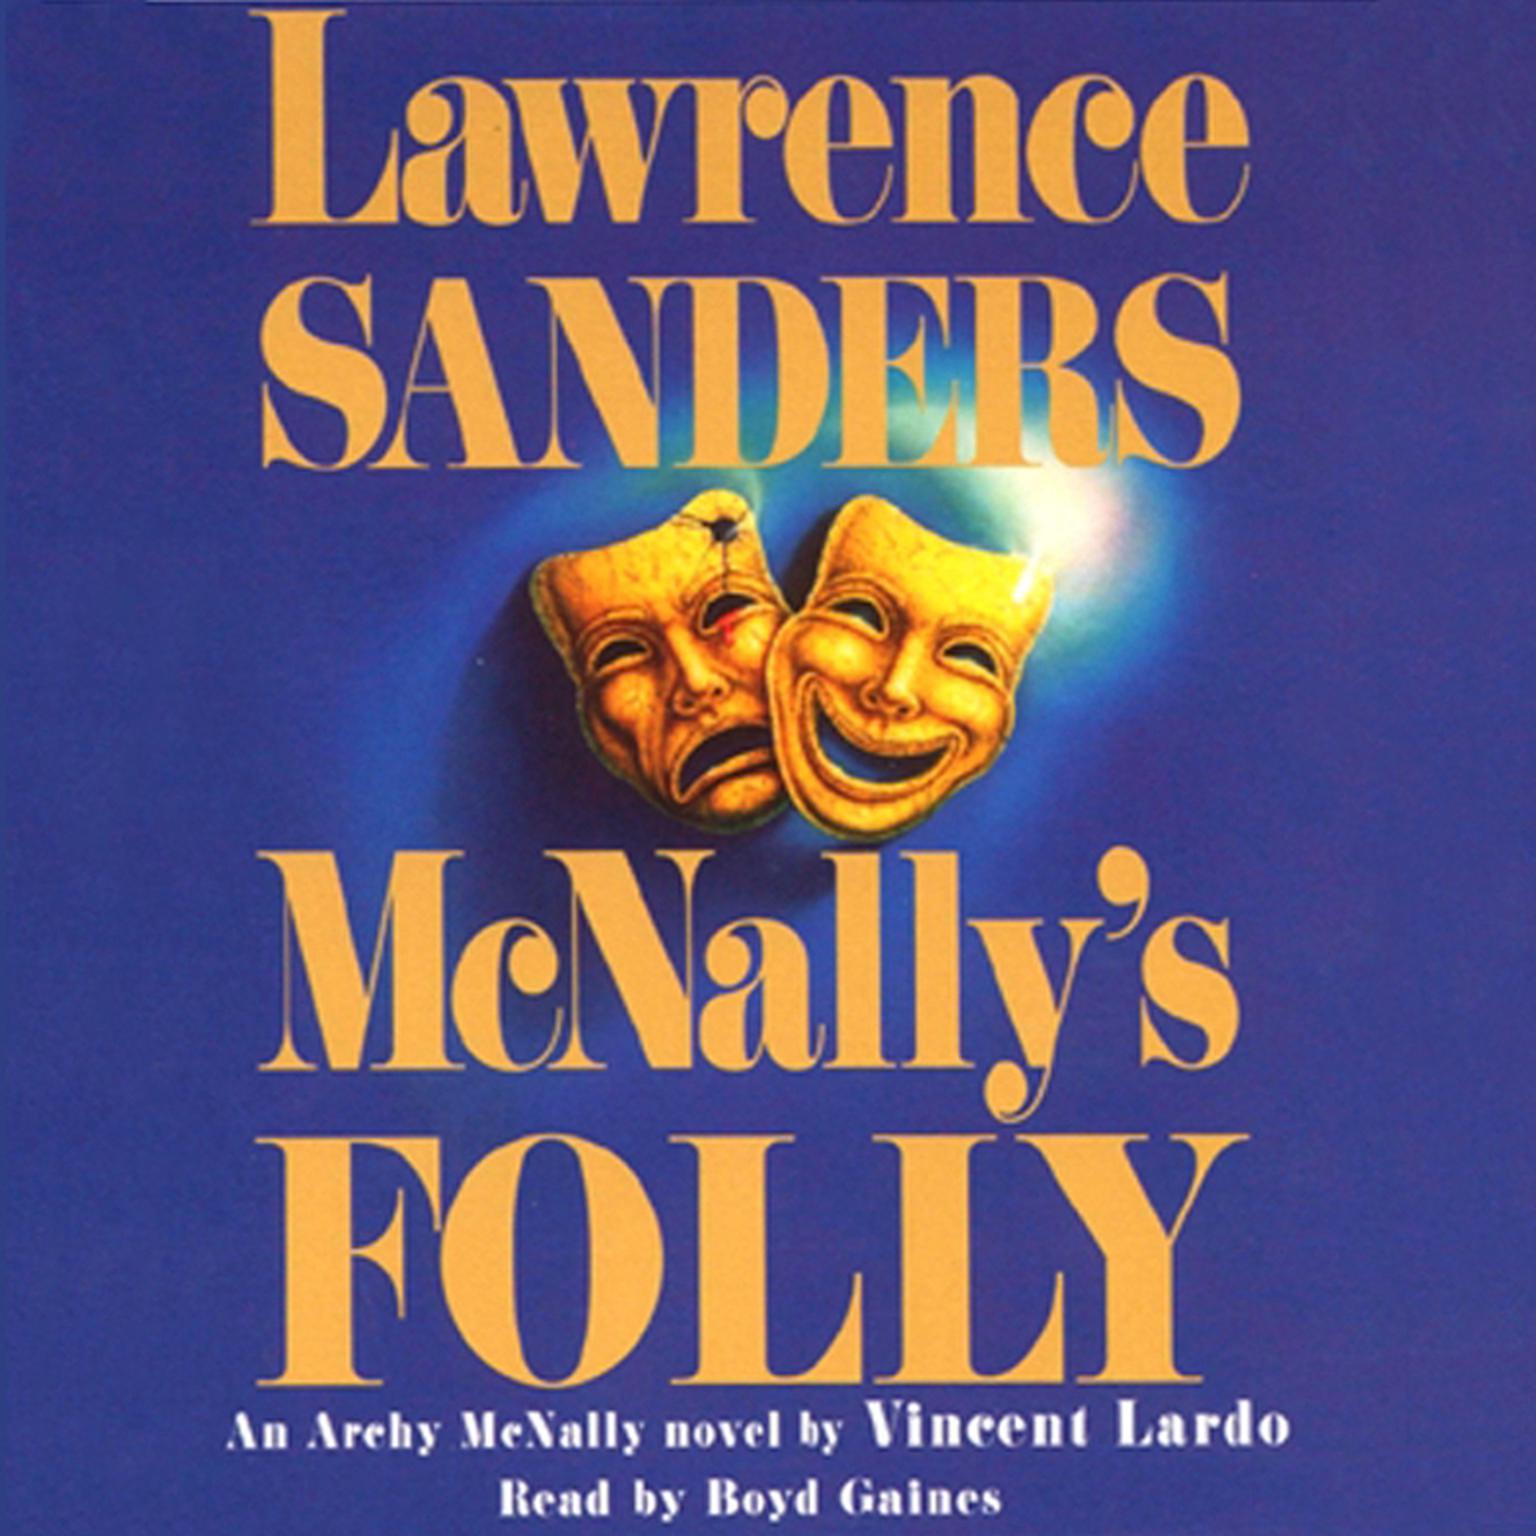 McNally’s Folly (Abridged): An Archy McNally Novel Audiobook, by Vincent Lardo